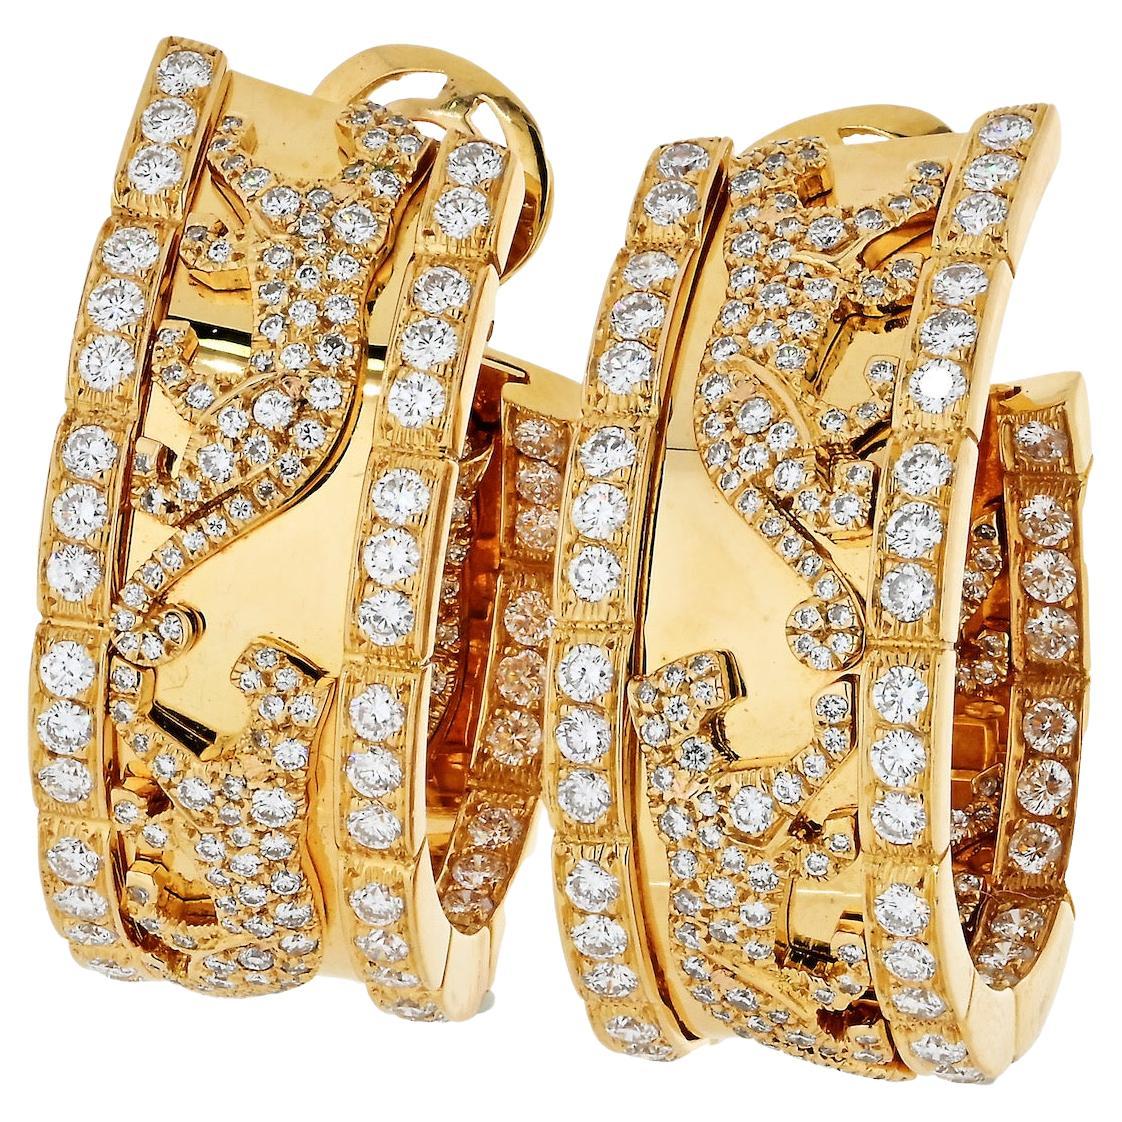 Cartier 18K Yellow Gold Diamond Walking Panthere Earrings